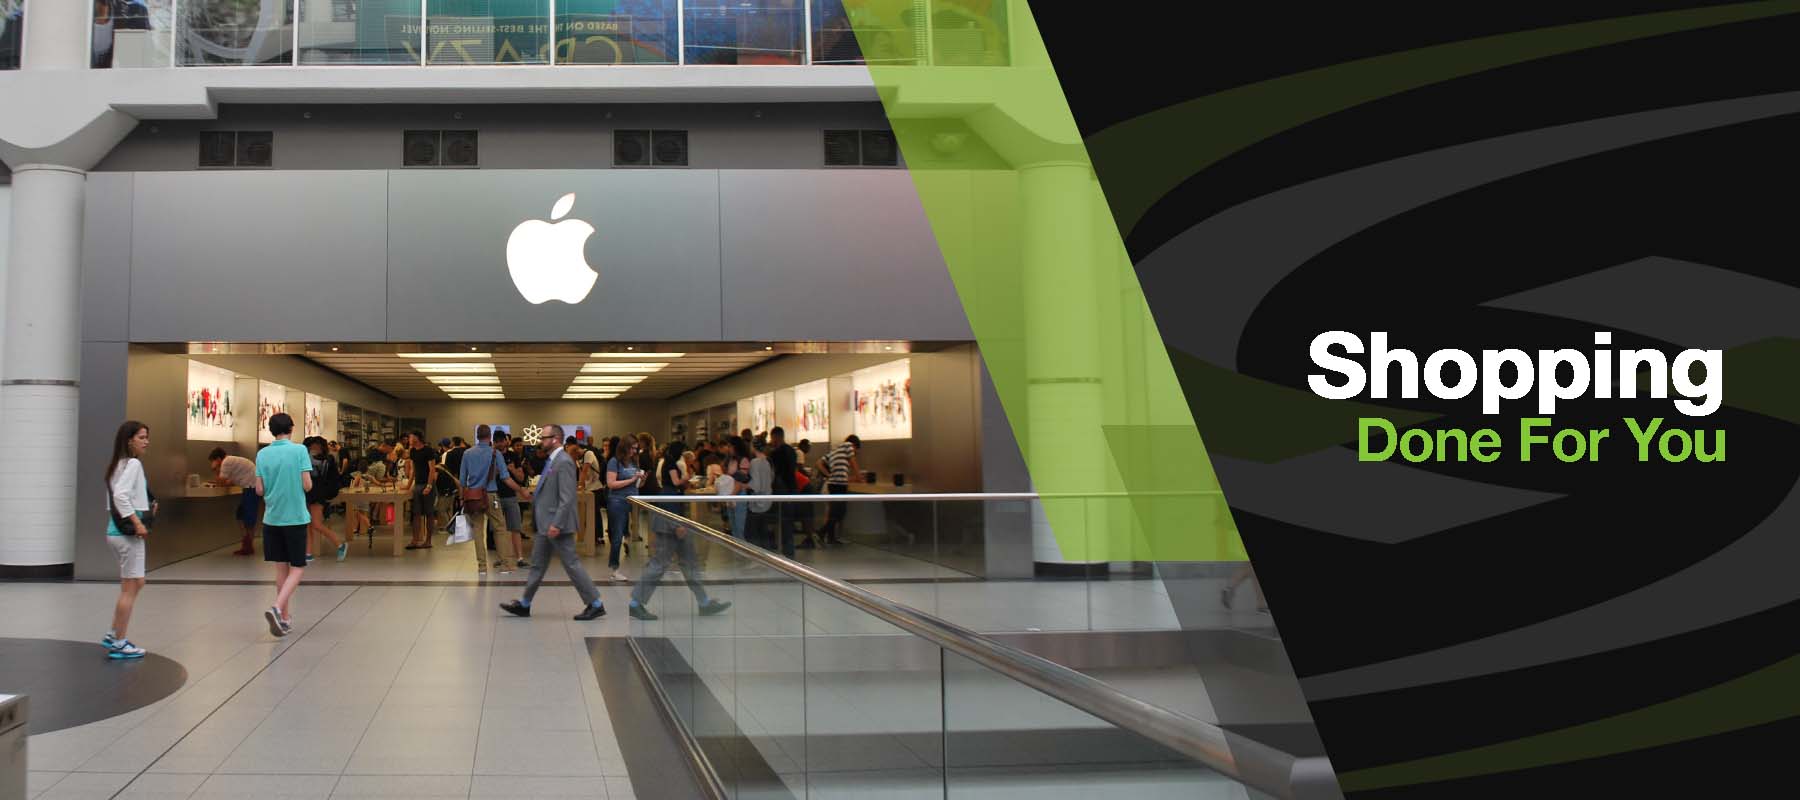 Apple Store shopping for iPhones, iPads, iMacs, Macbooks, Apple TVs - Toronto, Ontario, Canada - Signa